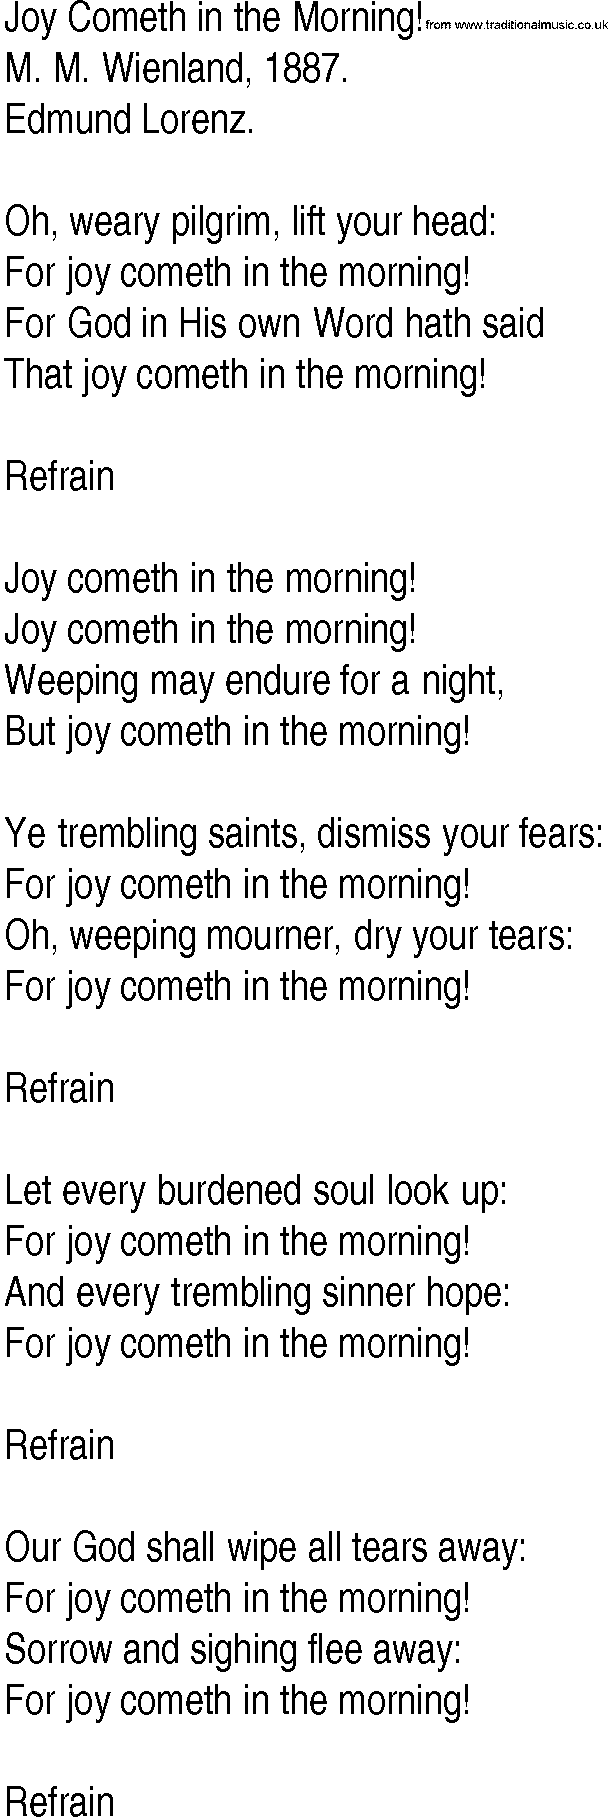 Hymn and Gospel Song: Joy Cometh in the Morning! by M M Wienland lyrics